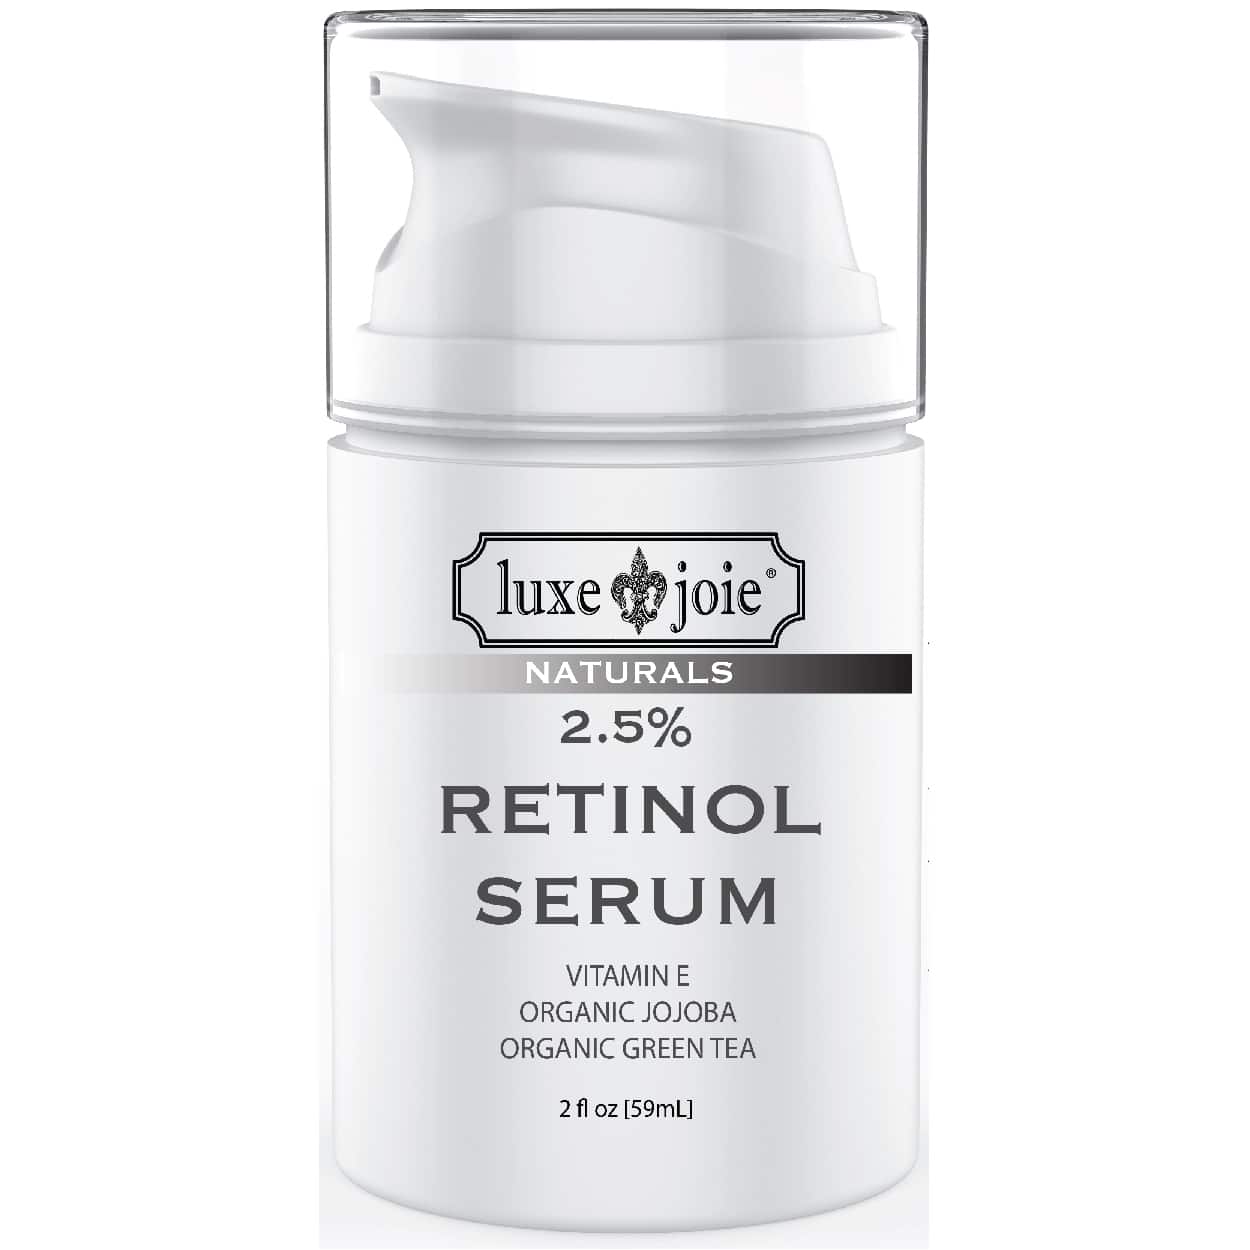 retinol serum for face